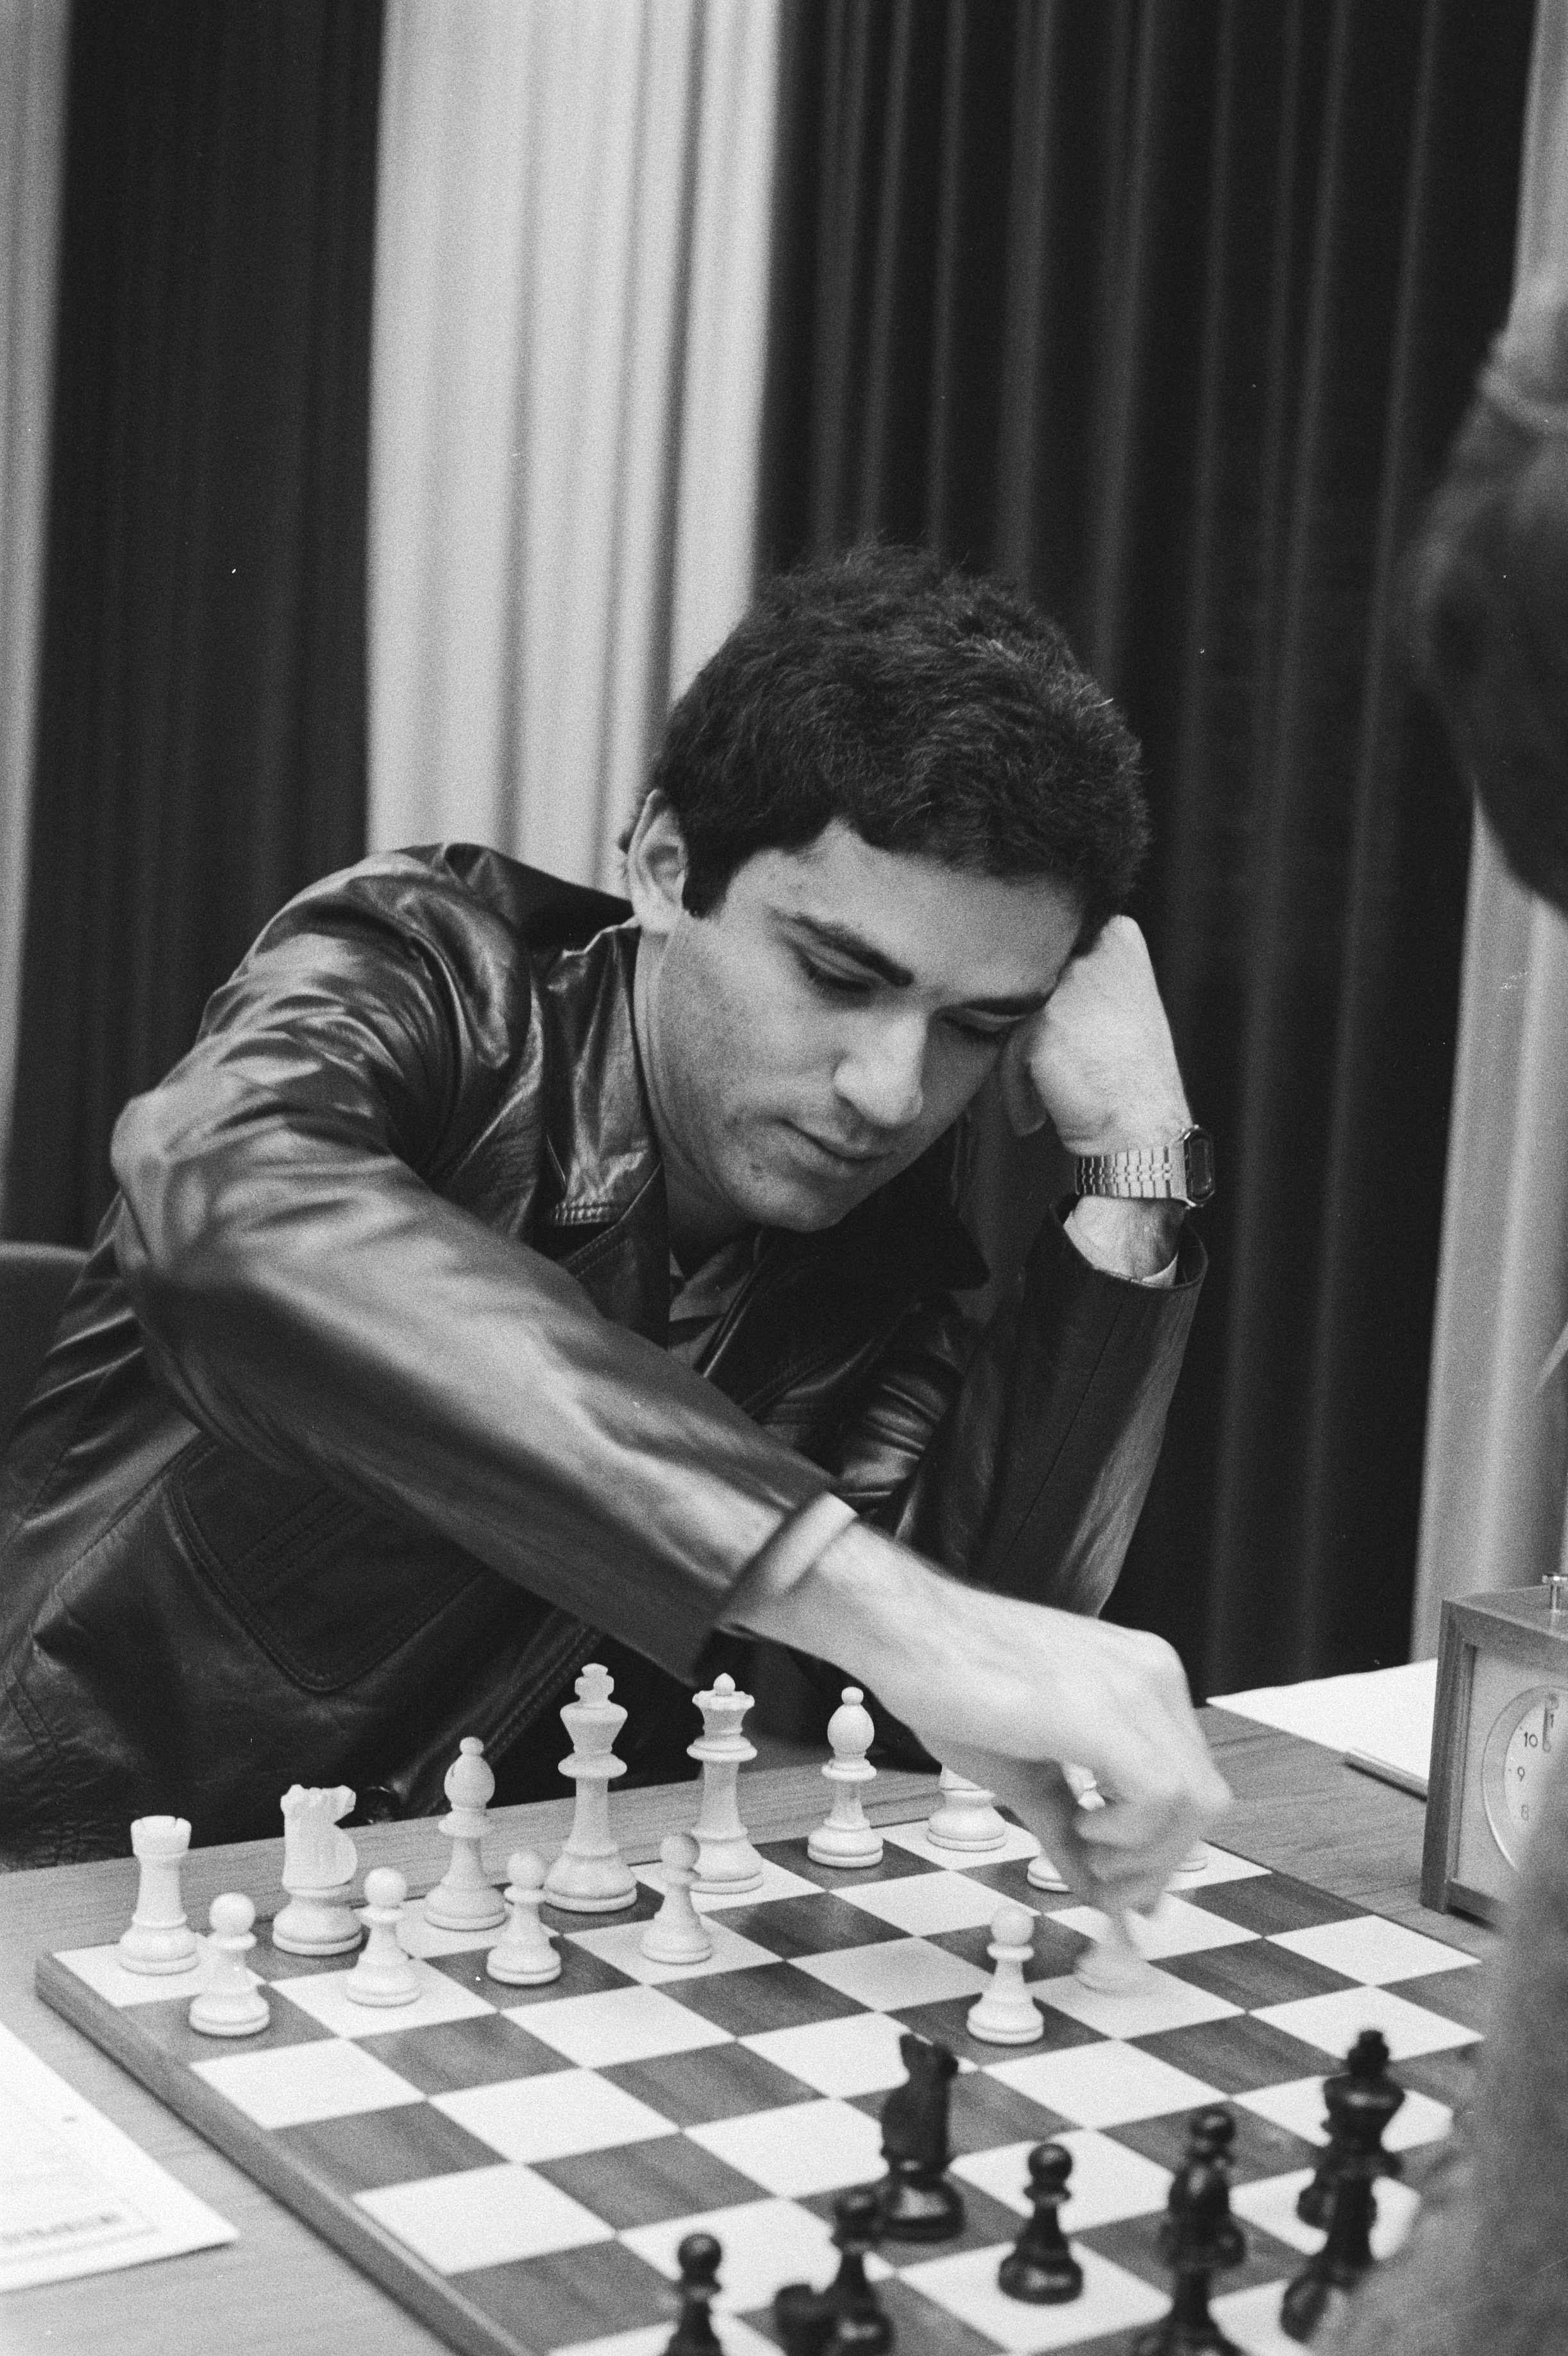 Garry Kasparov's Greatest Chess Games Volume 1 (Chess World